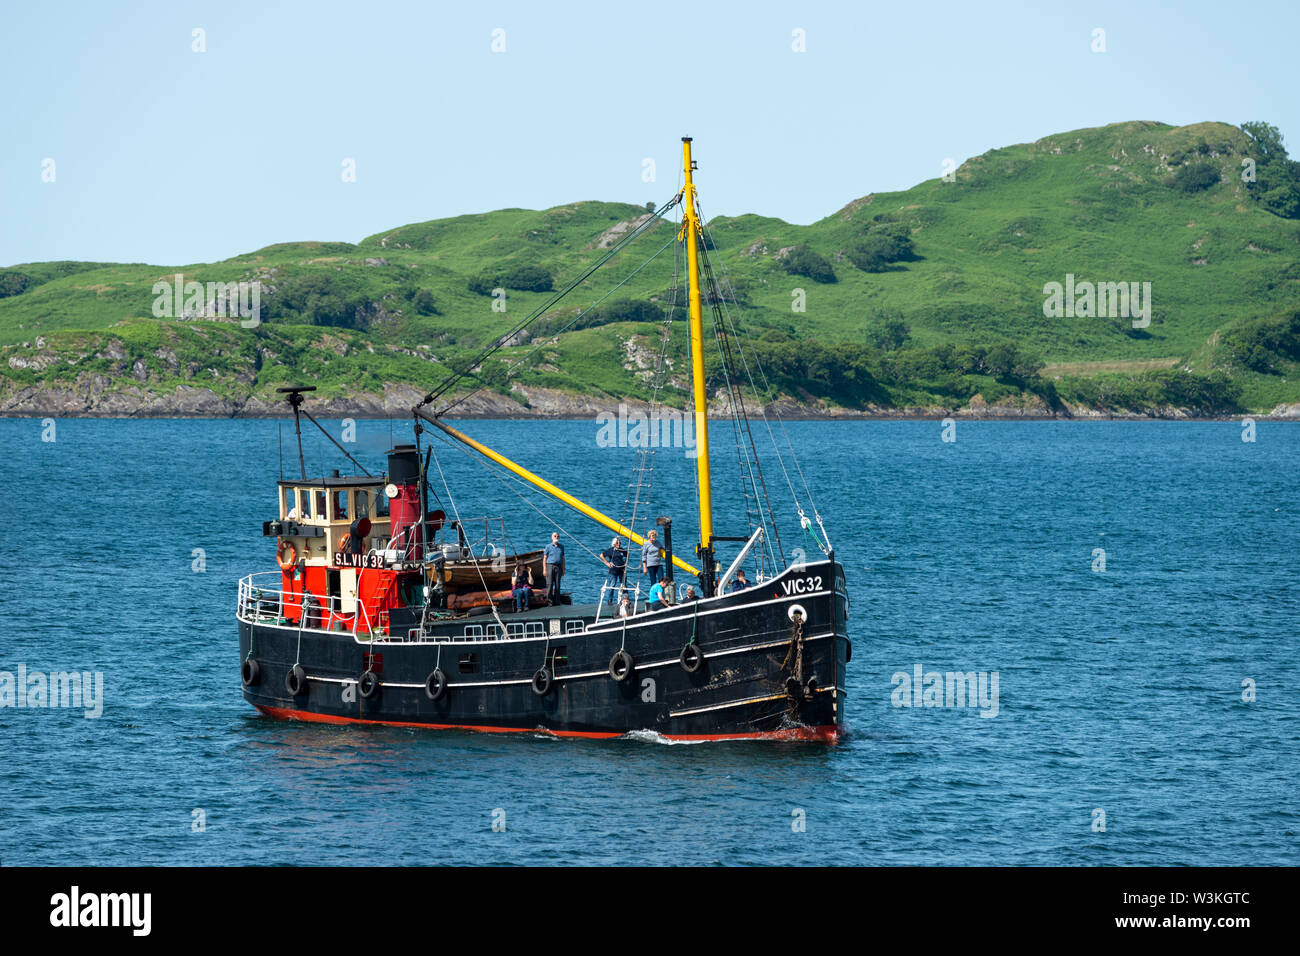 Scotland Crinan Duke Of Normandy II stean tug Stock Photo - Alamy